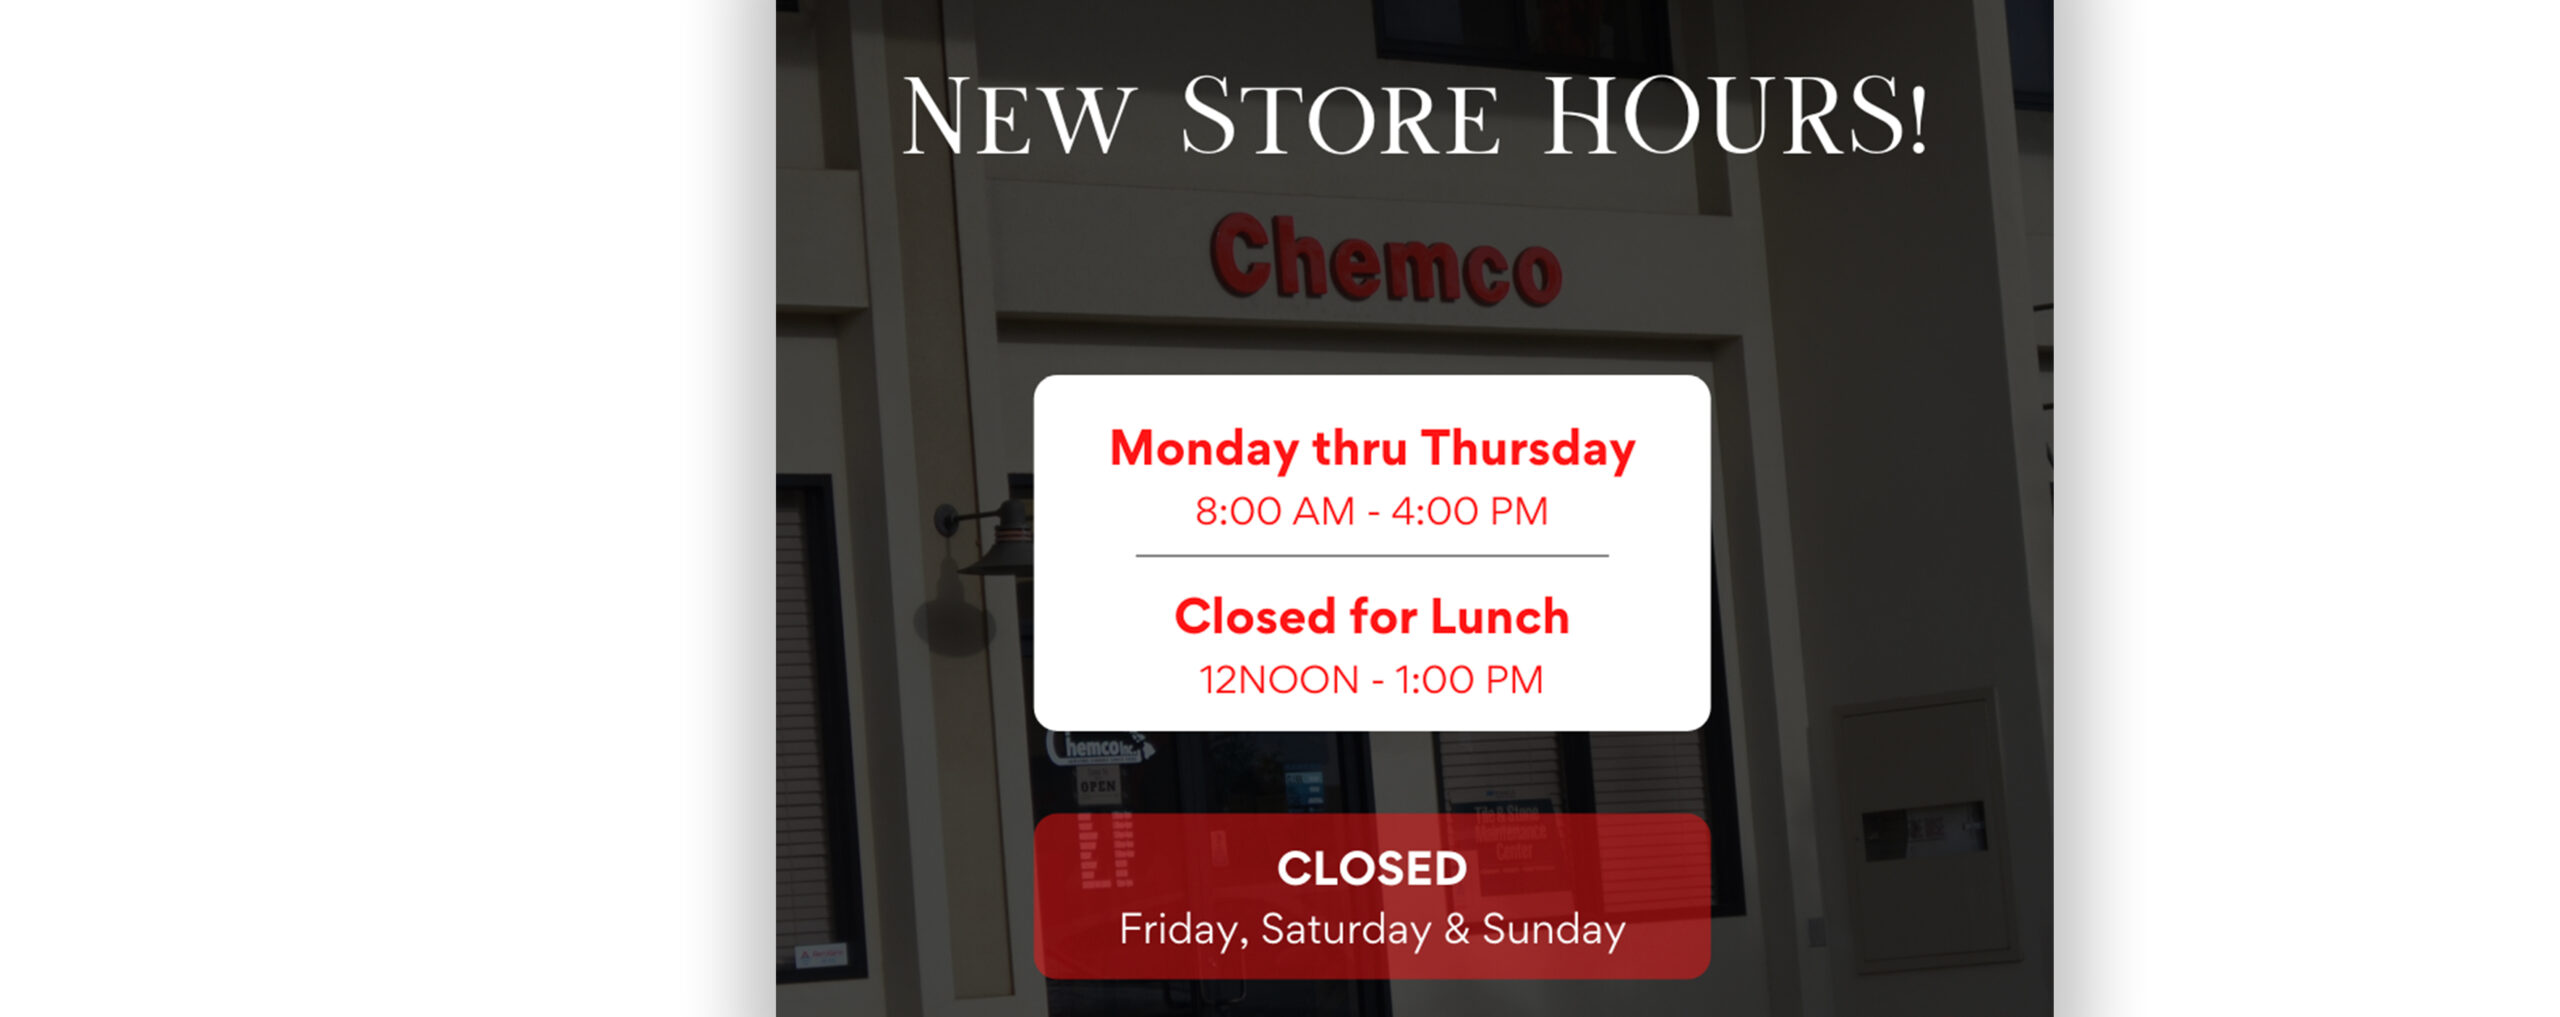 new-store-hours-chemco